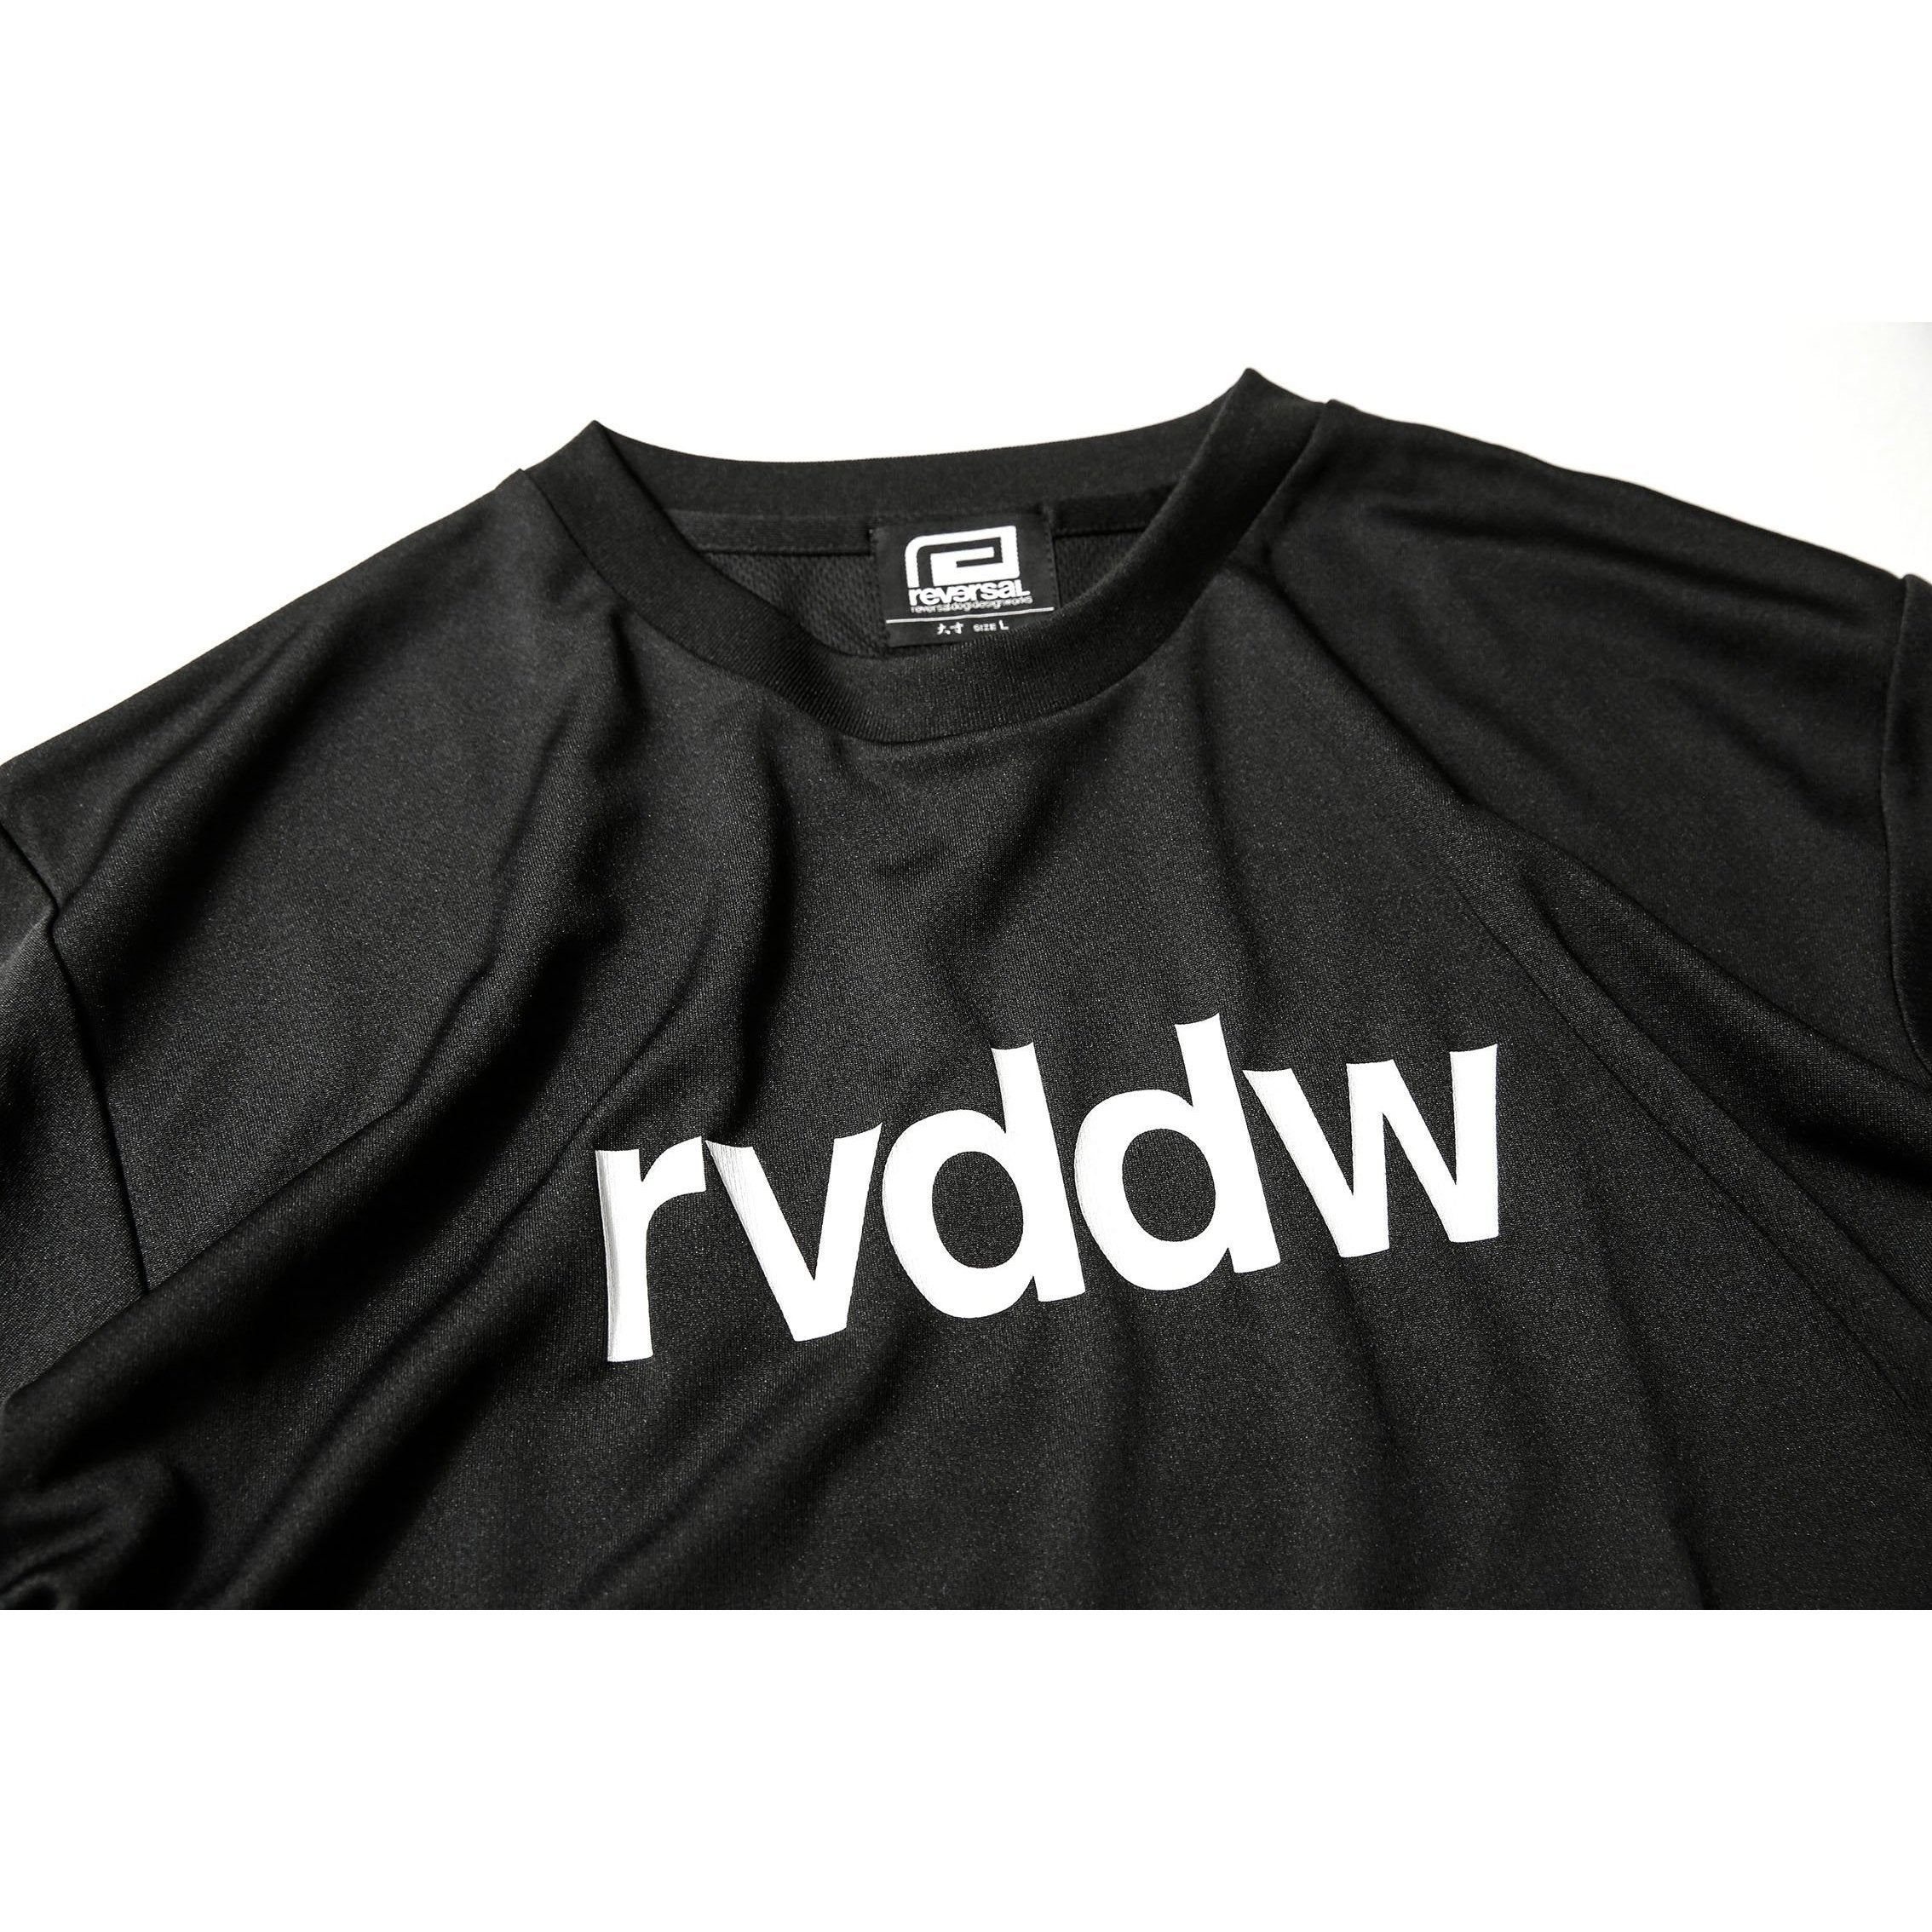 RVDDW Mesh T-Shirt